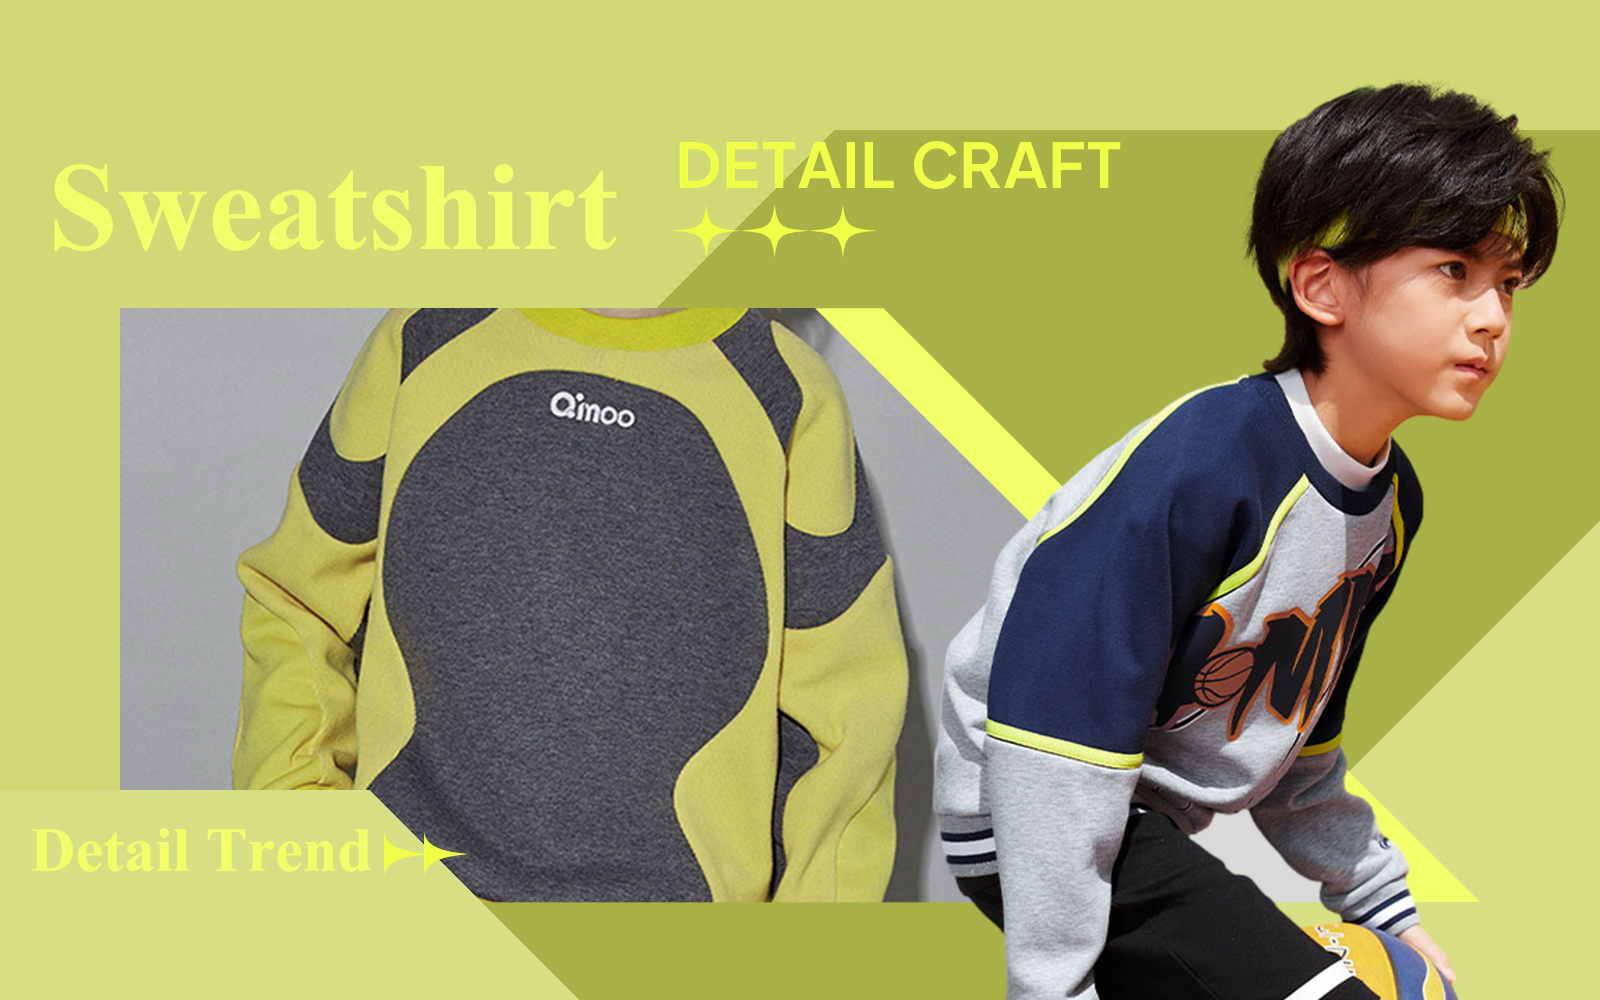 Sweatshirt -- The Detail & Craft Trend for Kidswear